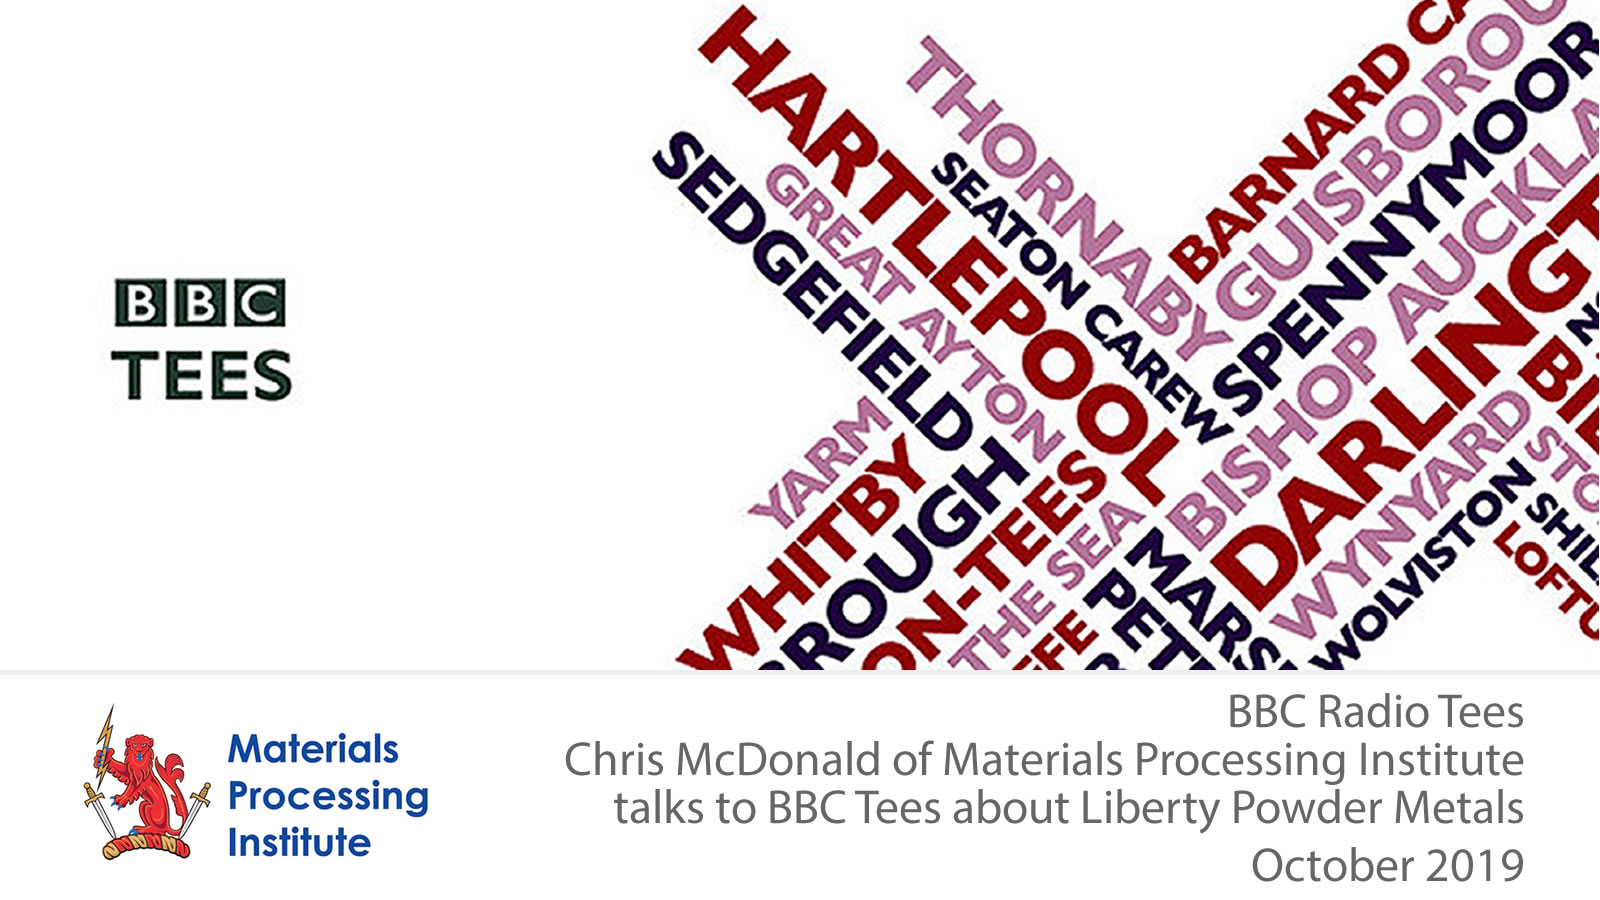 Chris McDonald of Materials Processing Institute talks to BBC Tees about Liberty Powder Metals - October 2019